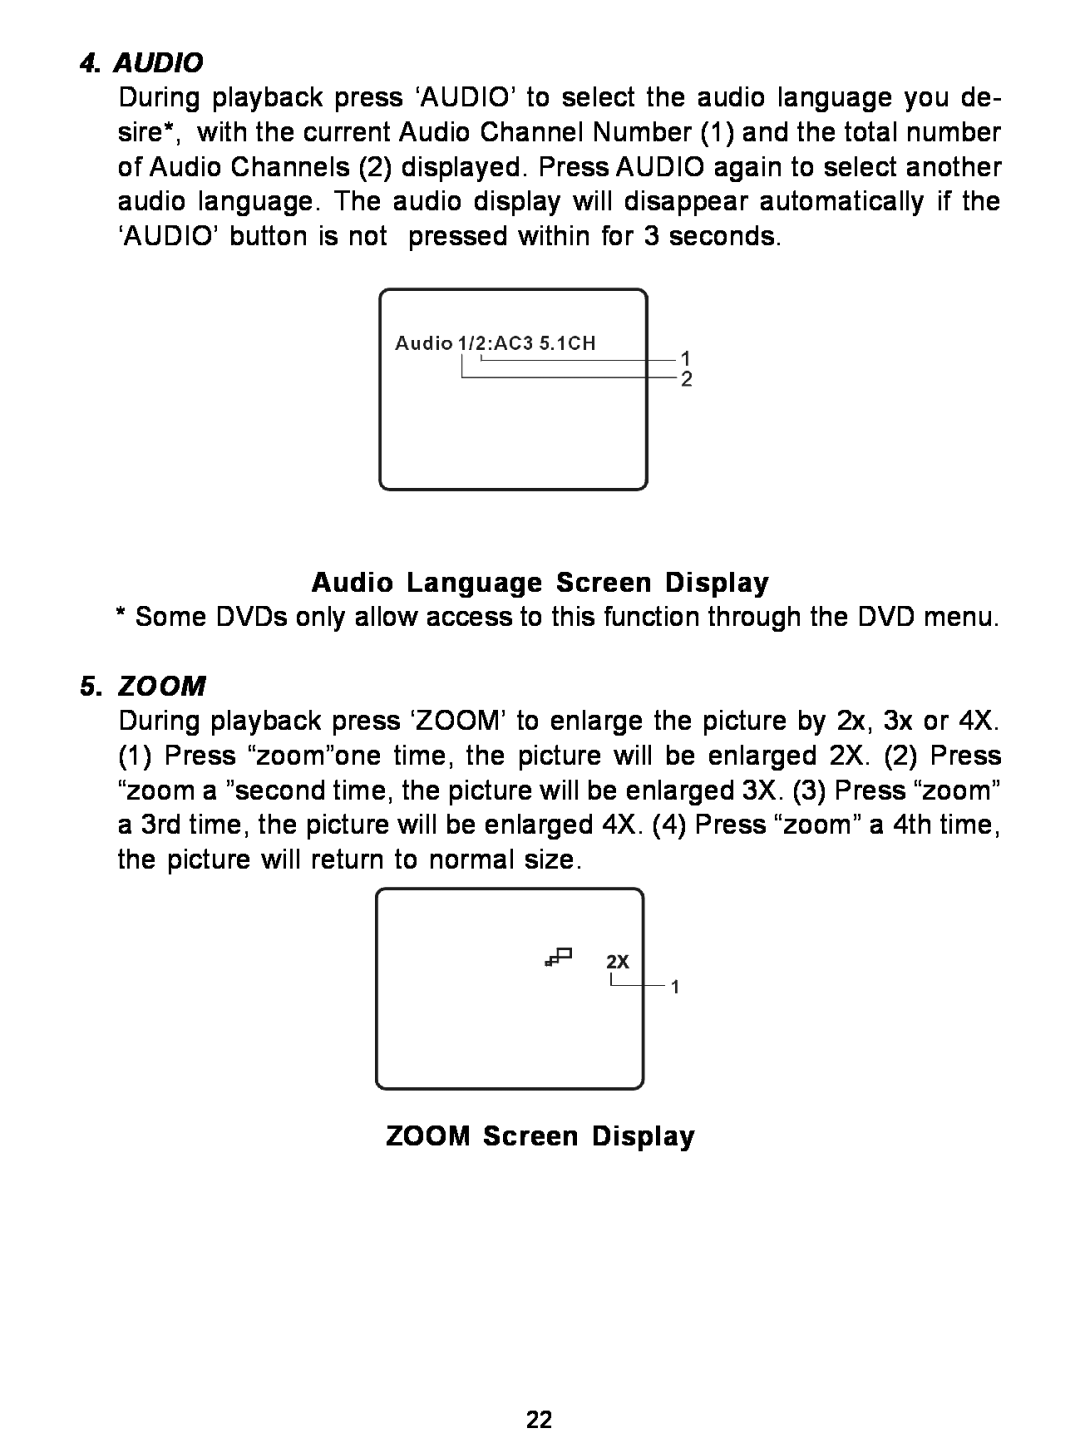 Audiovox D1726 manual Audio Language Screen Display, Zoom, ZOOM Screen Display 